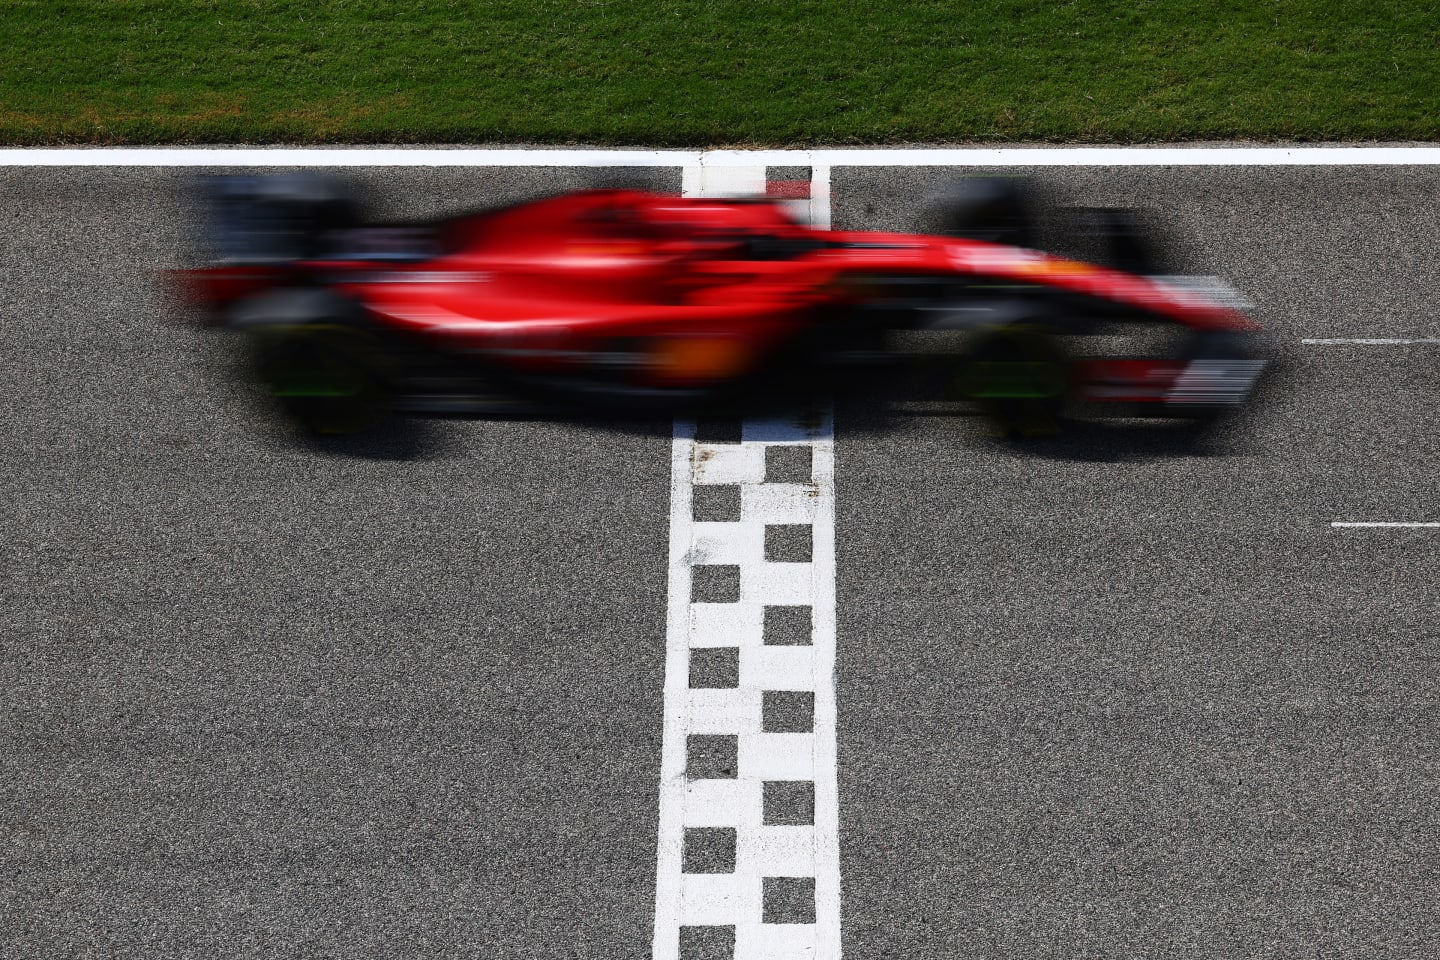 BAHRAIN, BAHRAIN - FEBRUARY 25: Charles Leclerc of Monaco driving the (16) Ferrari SF-23 on track